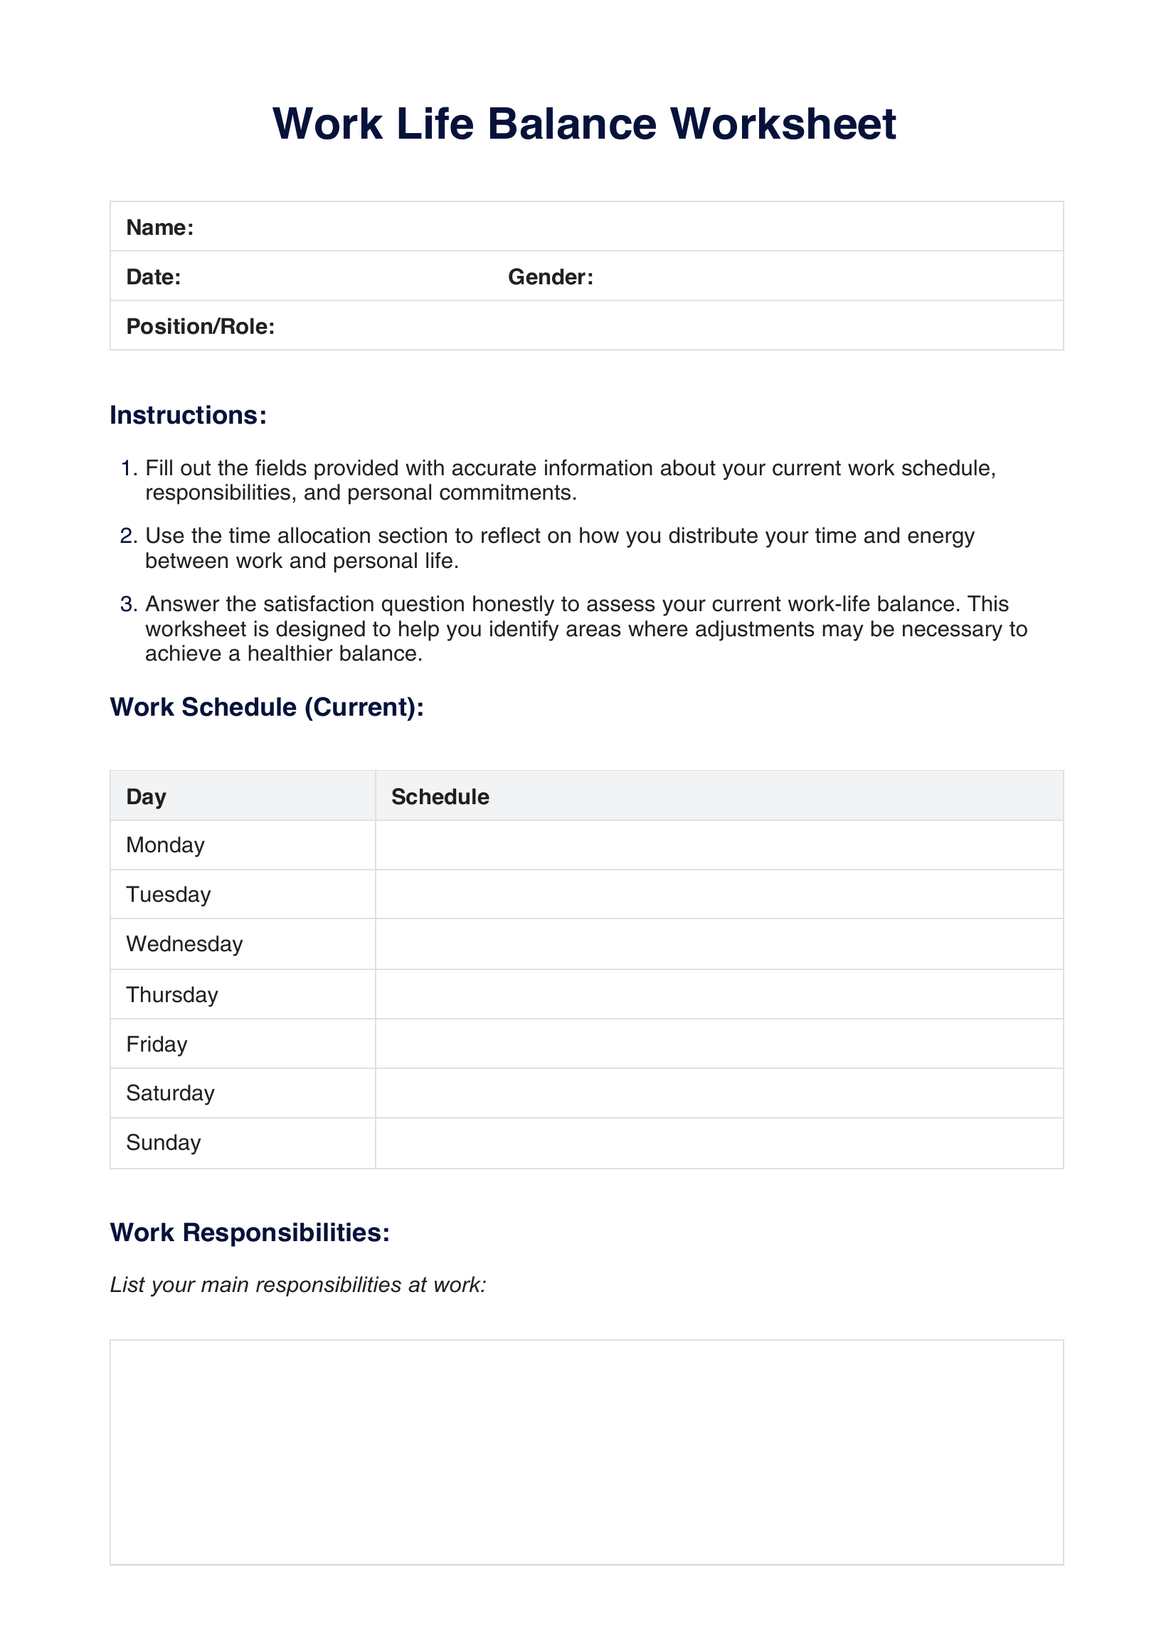 Work-Life Balance Worksheet PDF Example